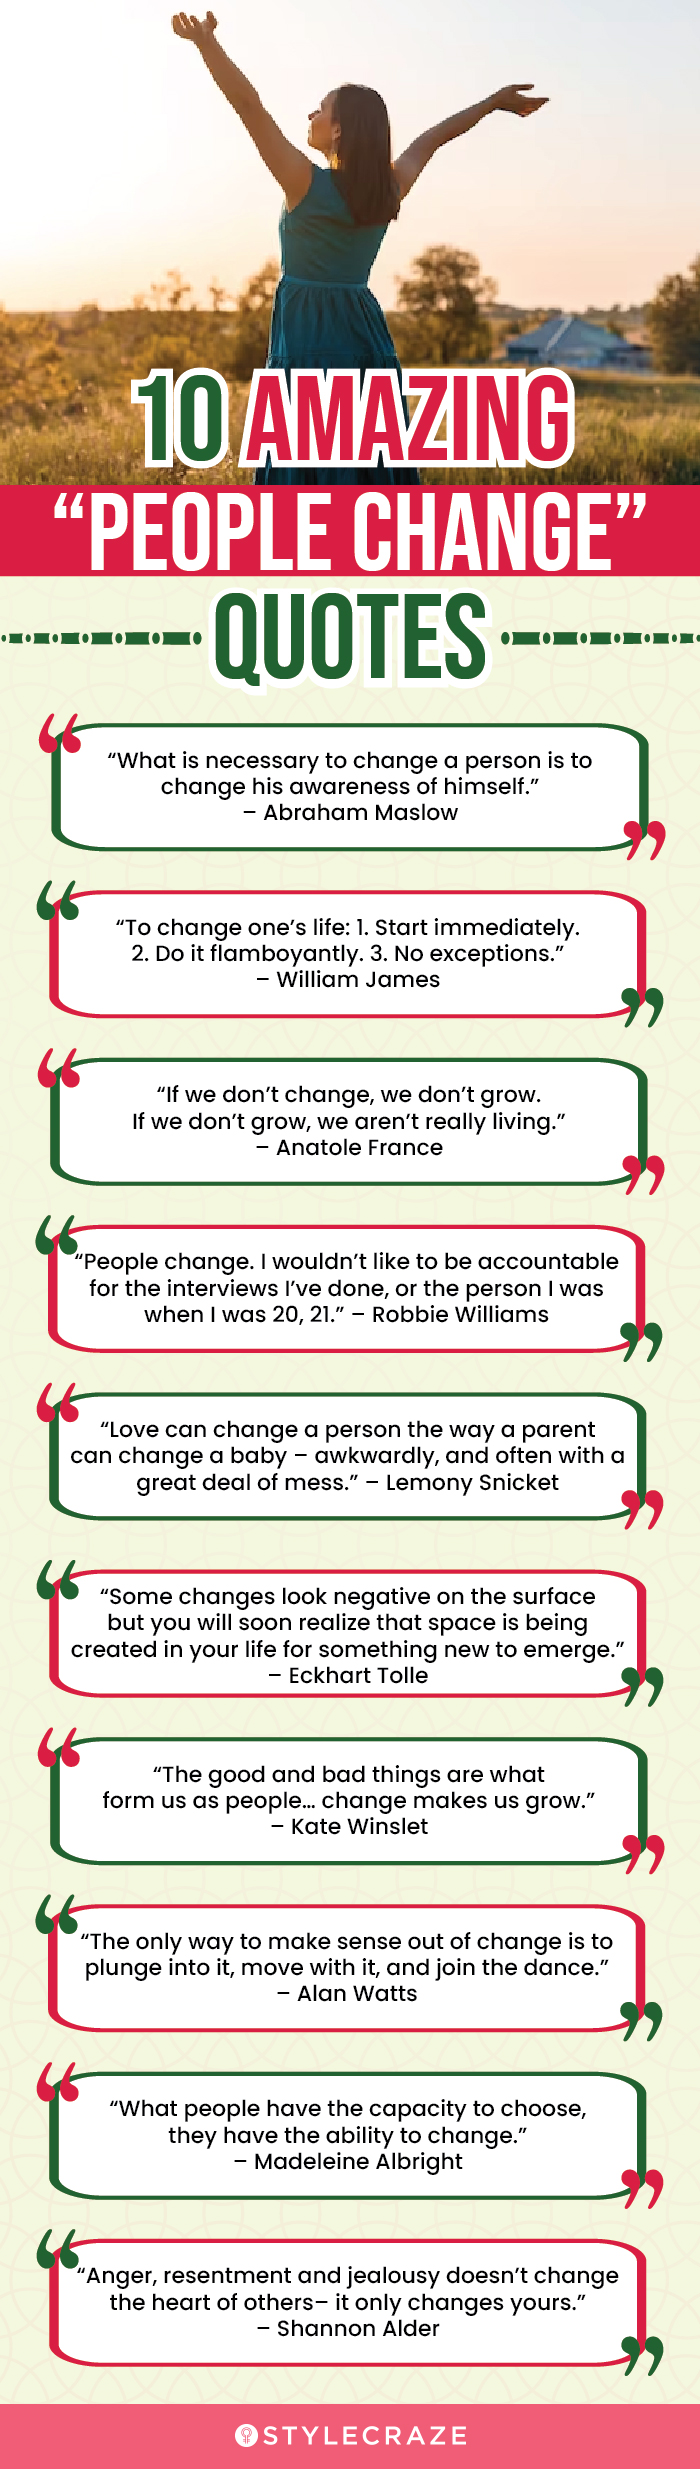 10 amazing “people change” quotes (infographic)